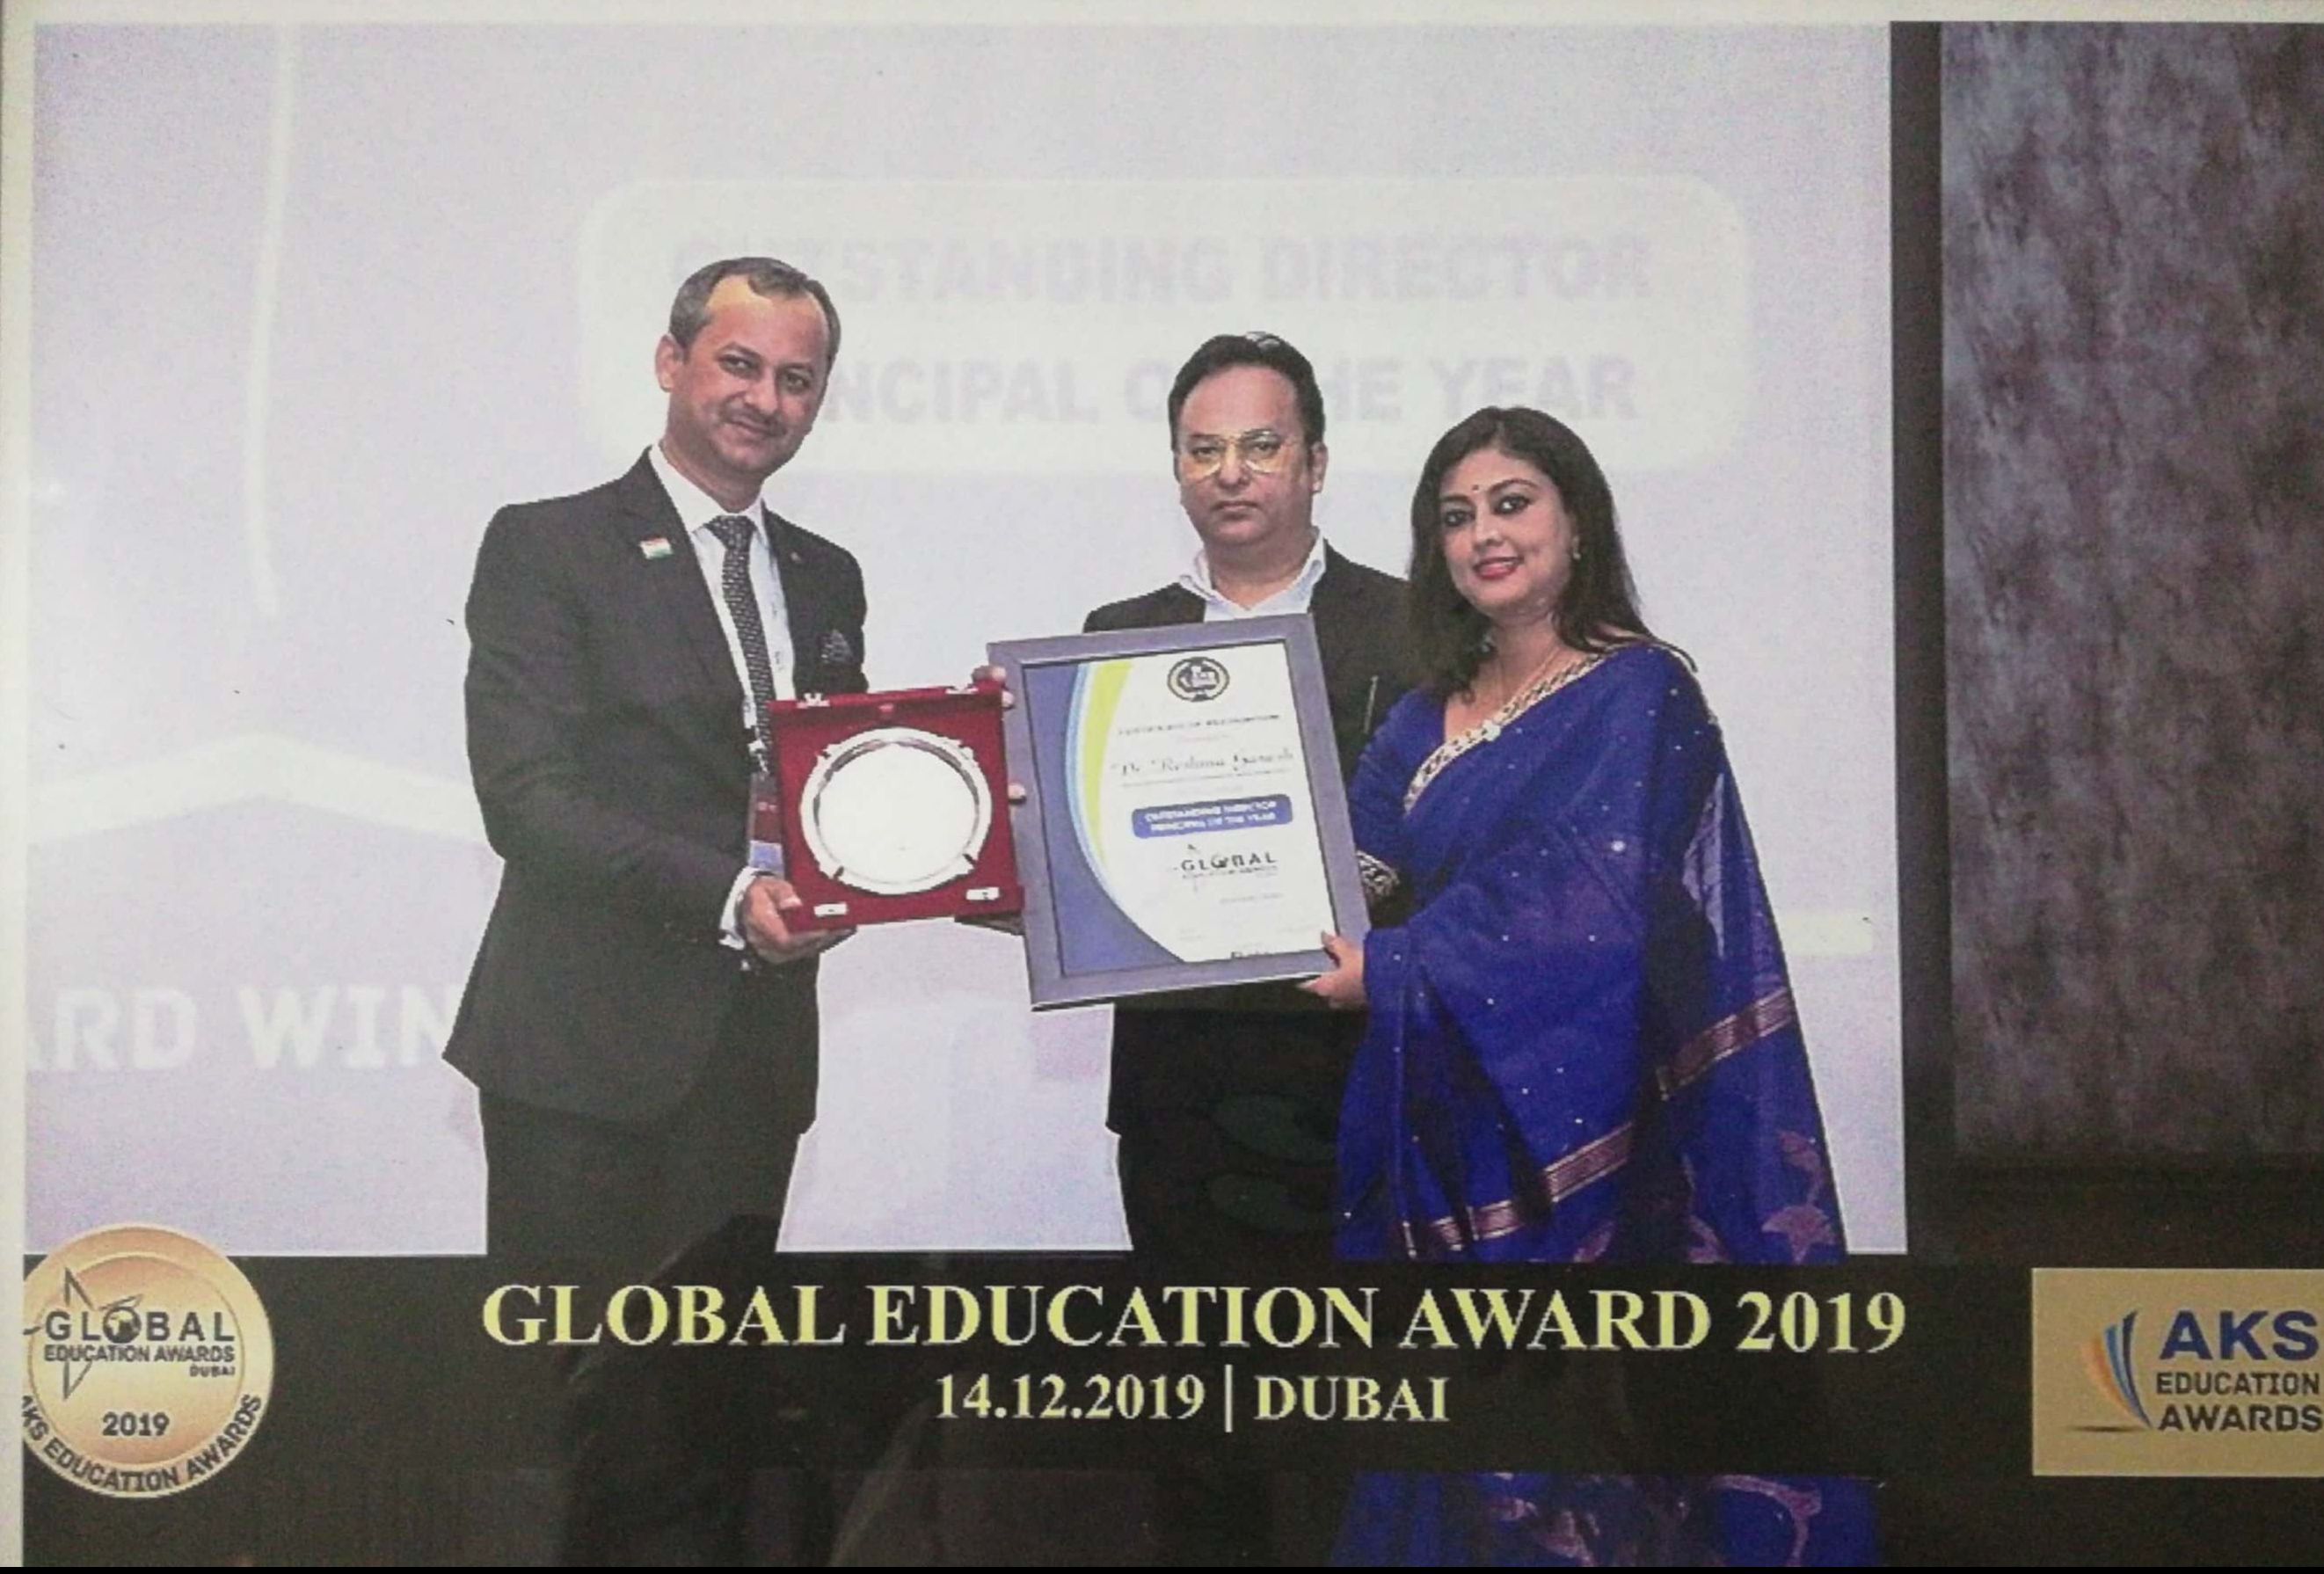 GLOBAL EDUCATION AWARD 2019